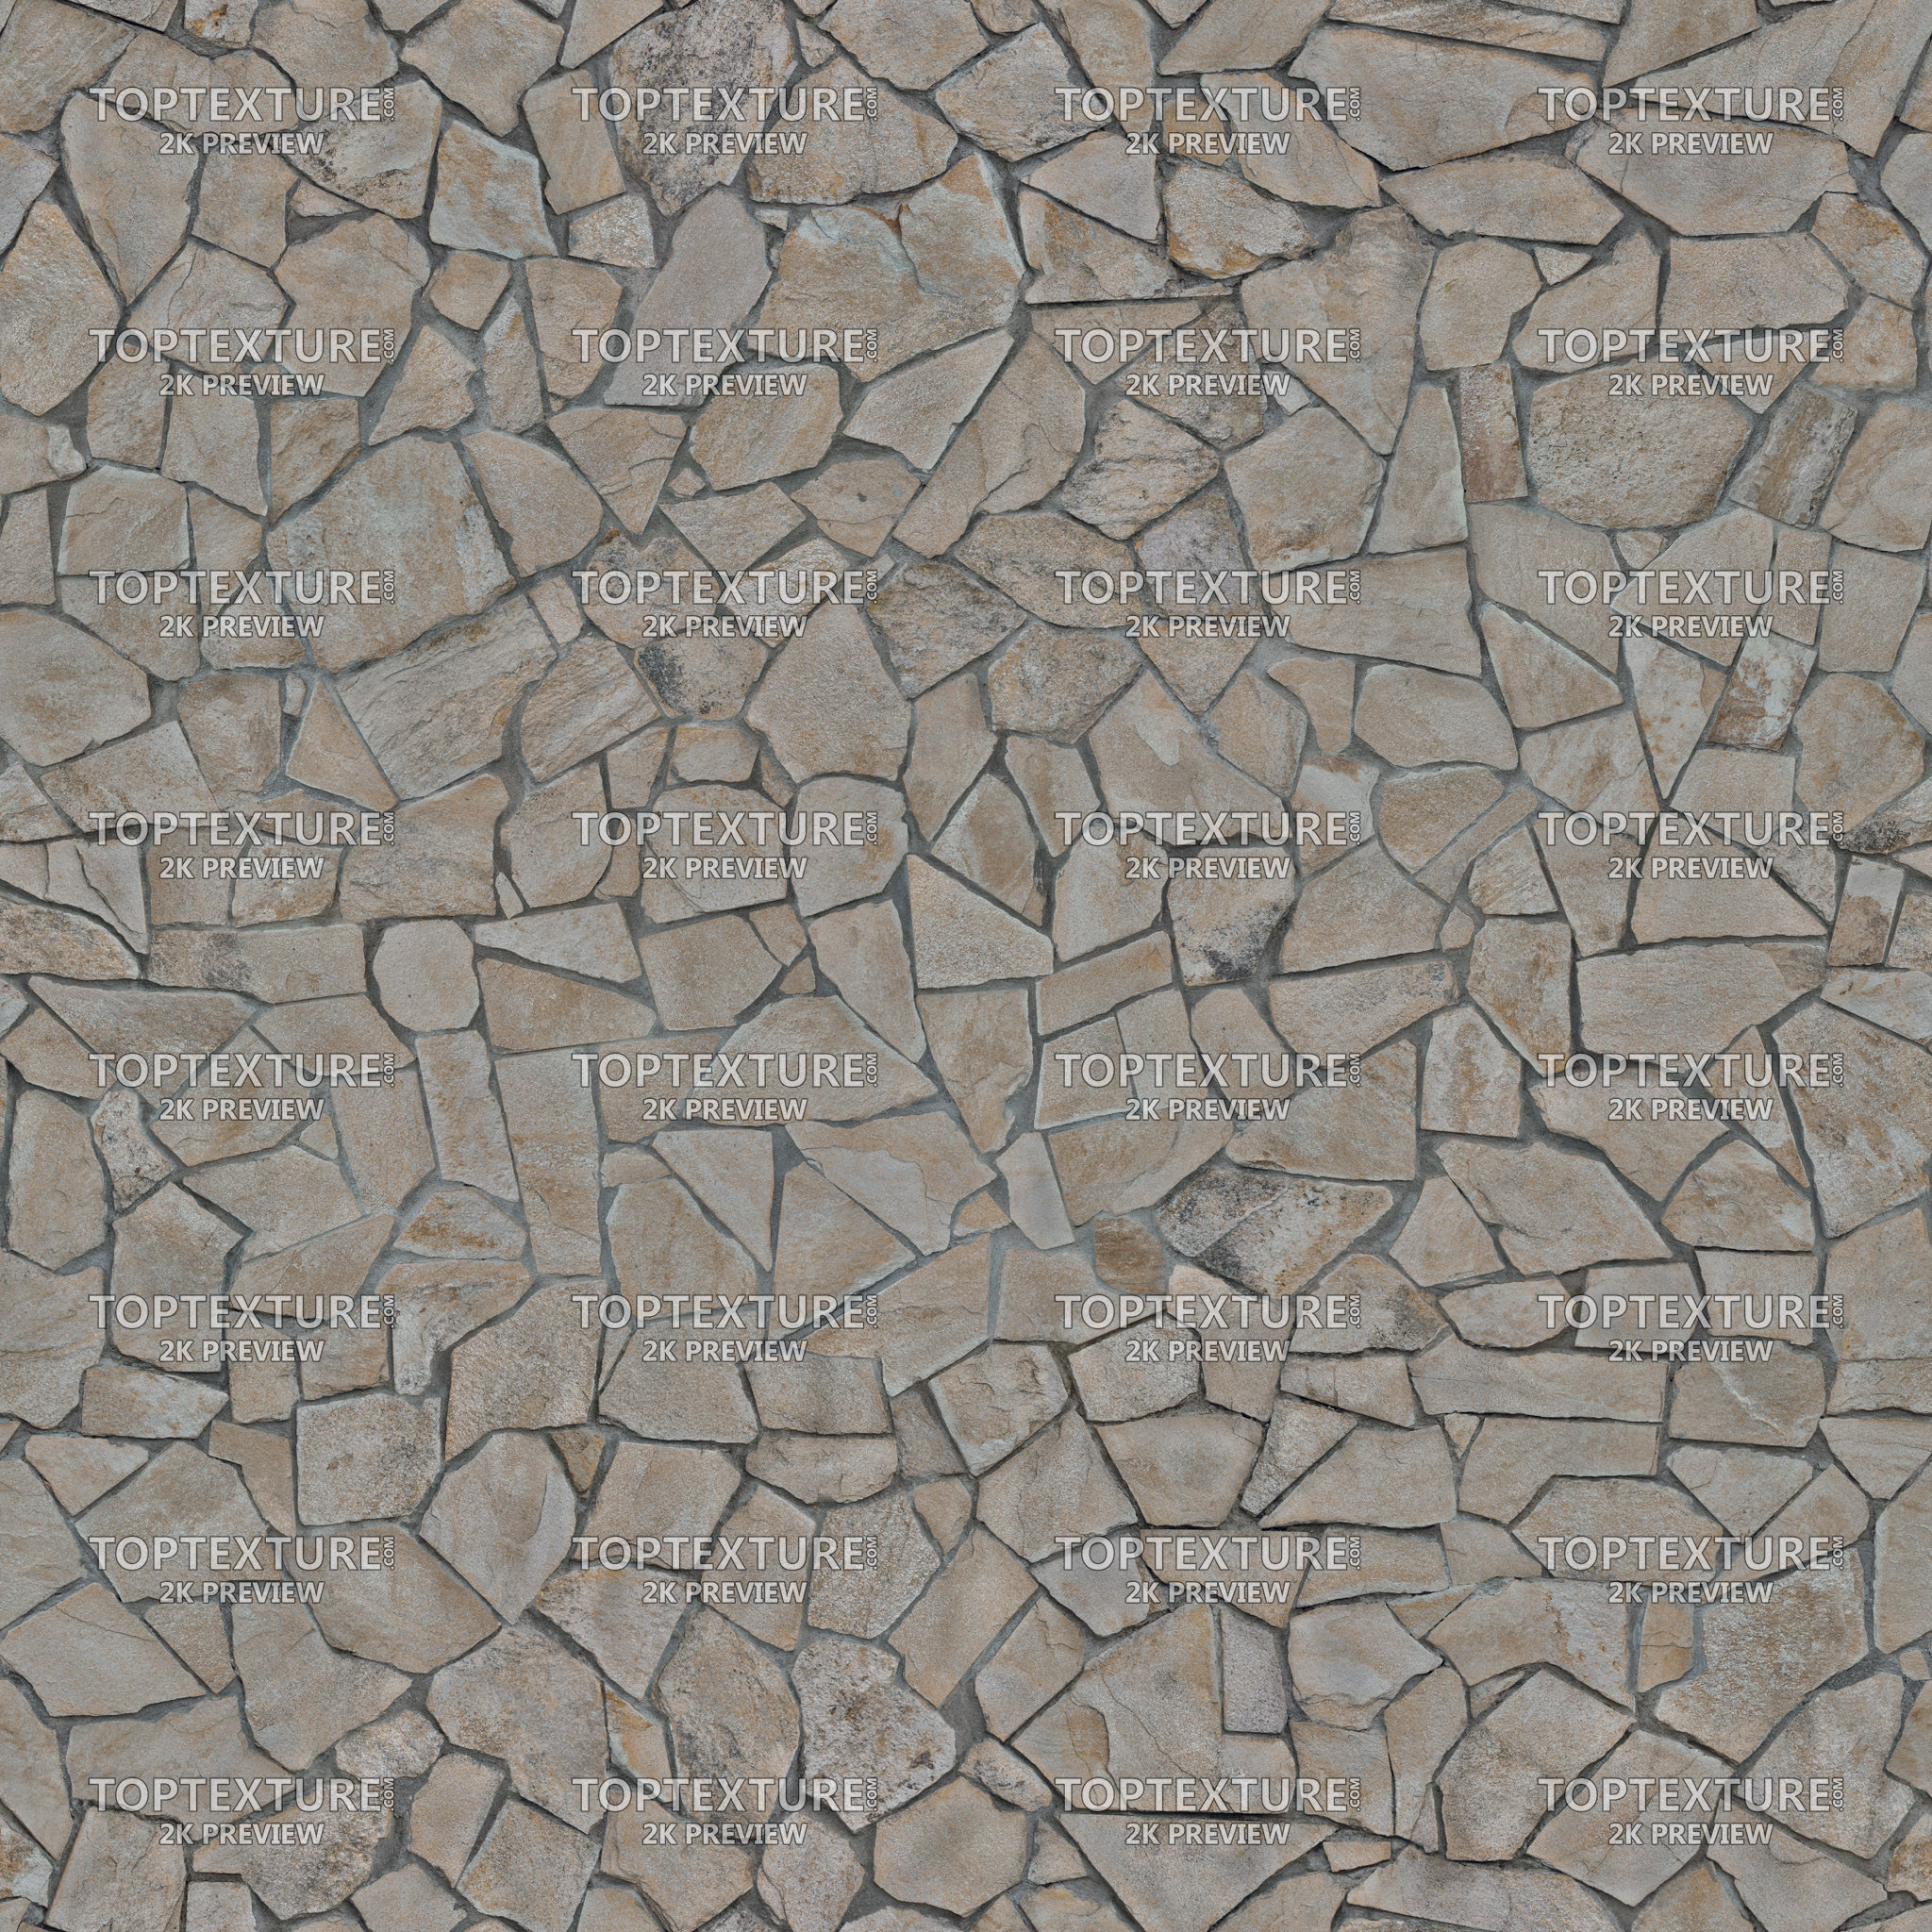 Irregular Shaped Beige-Brown Stone Tiles - Top Texture